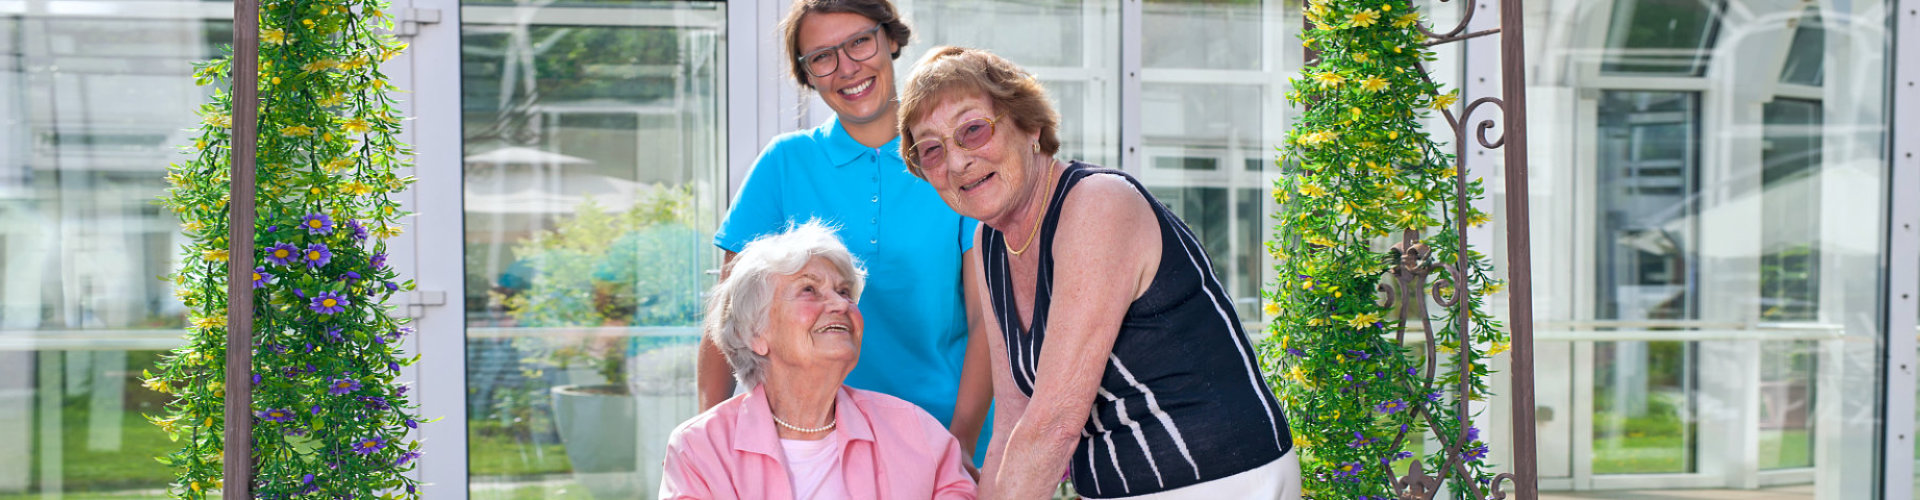 woman seniors and caregiver smiling